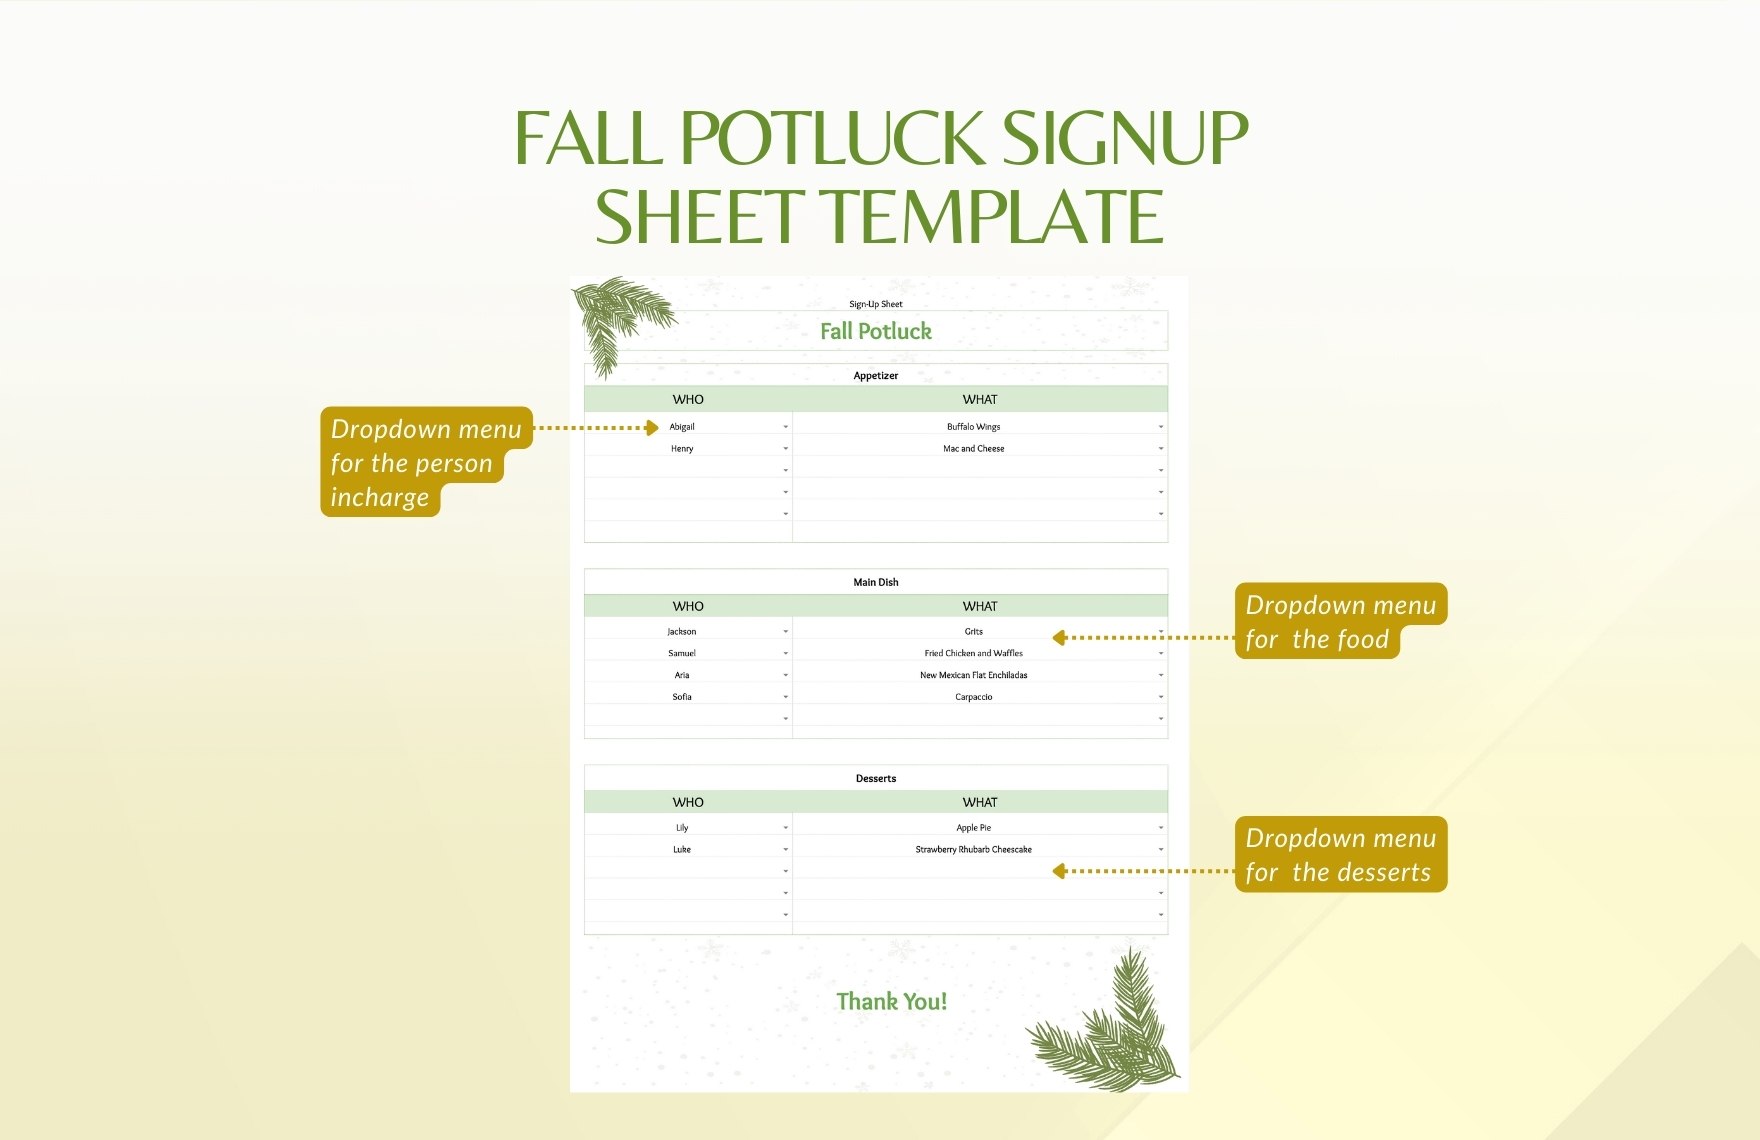 Fall Potluck Signup Sheet Template